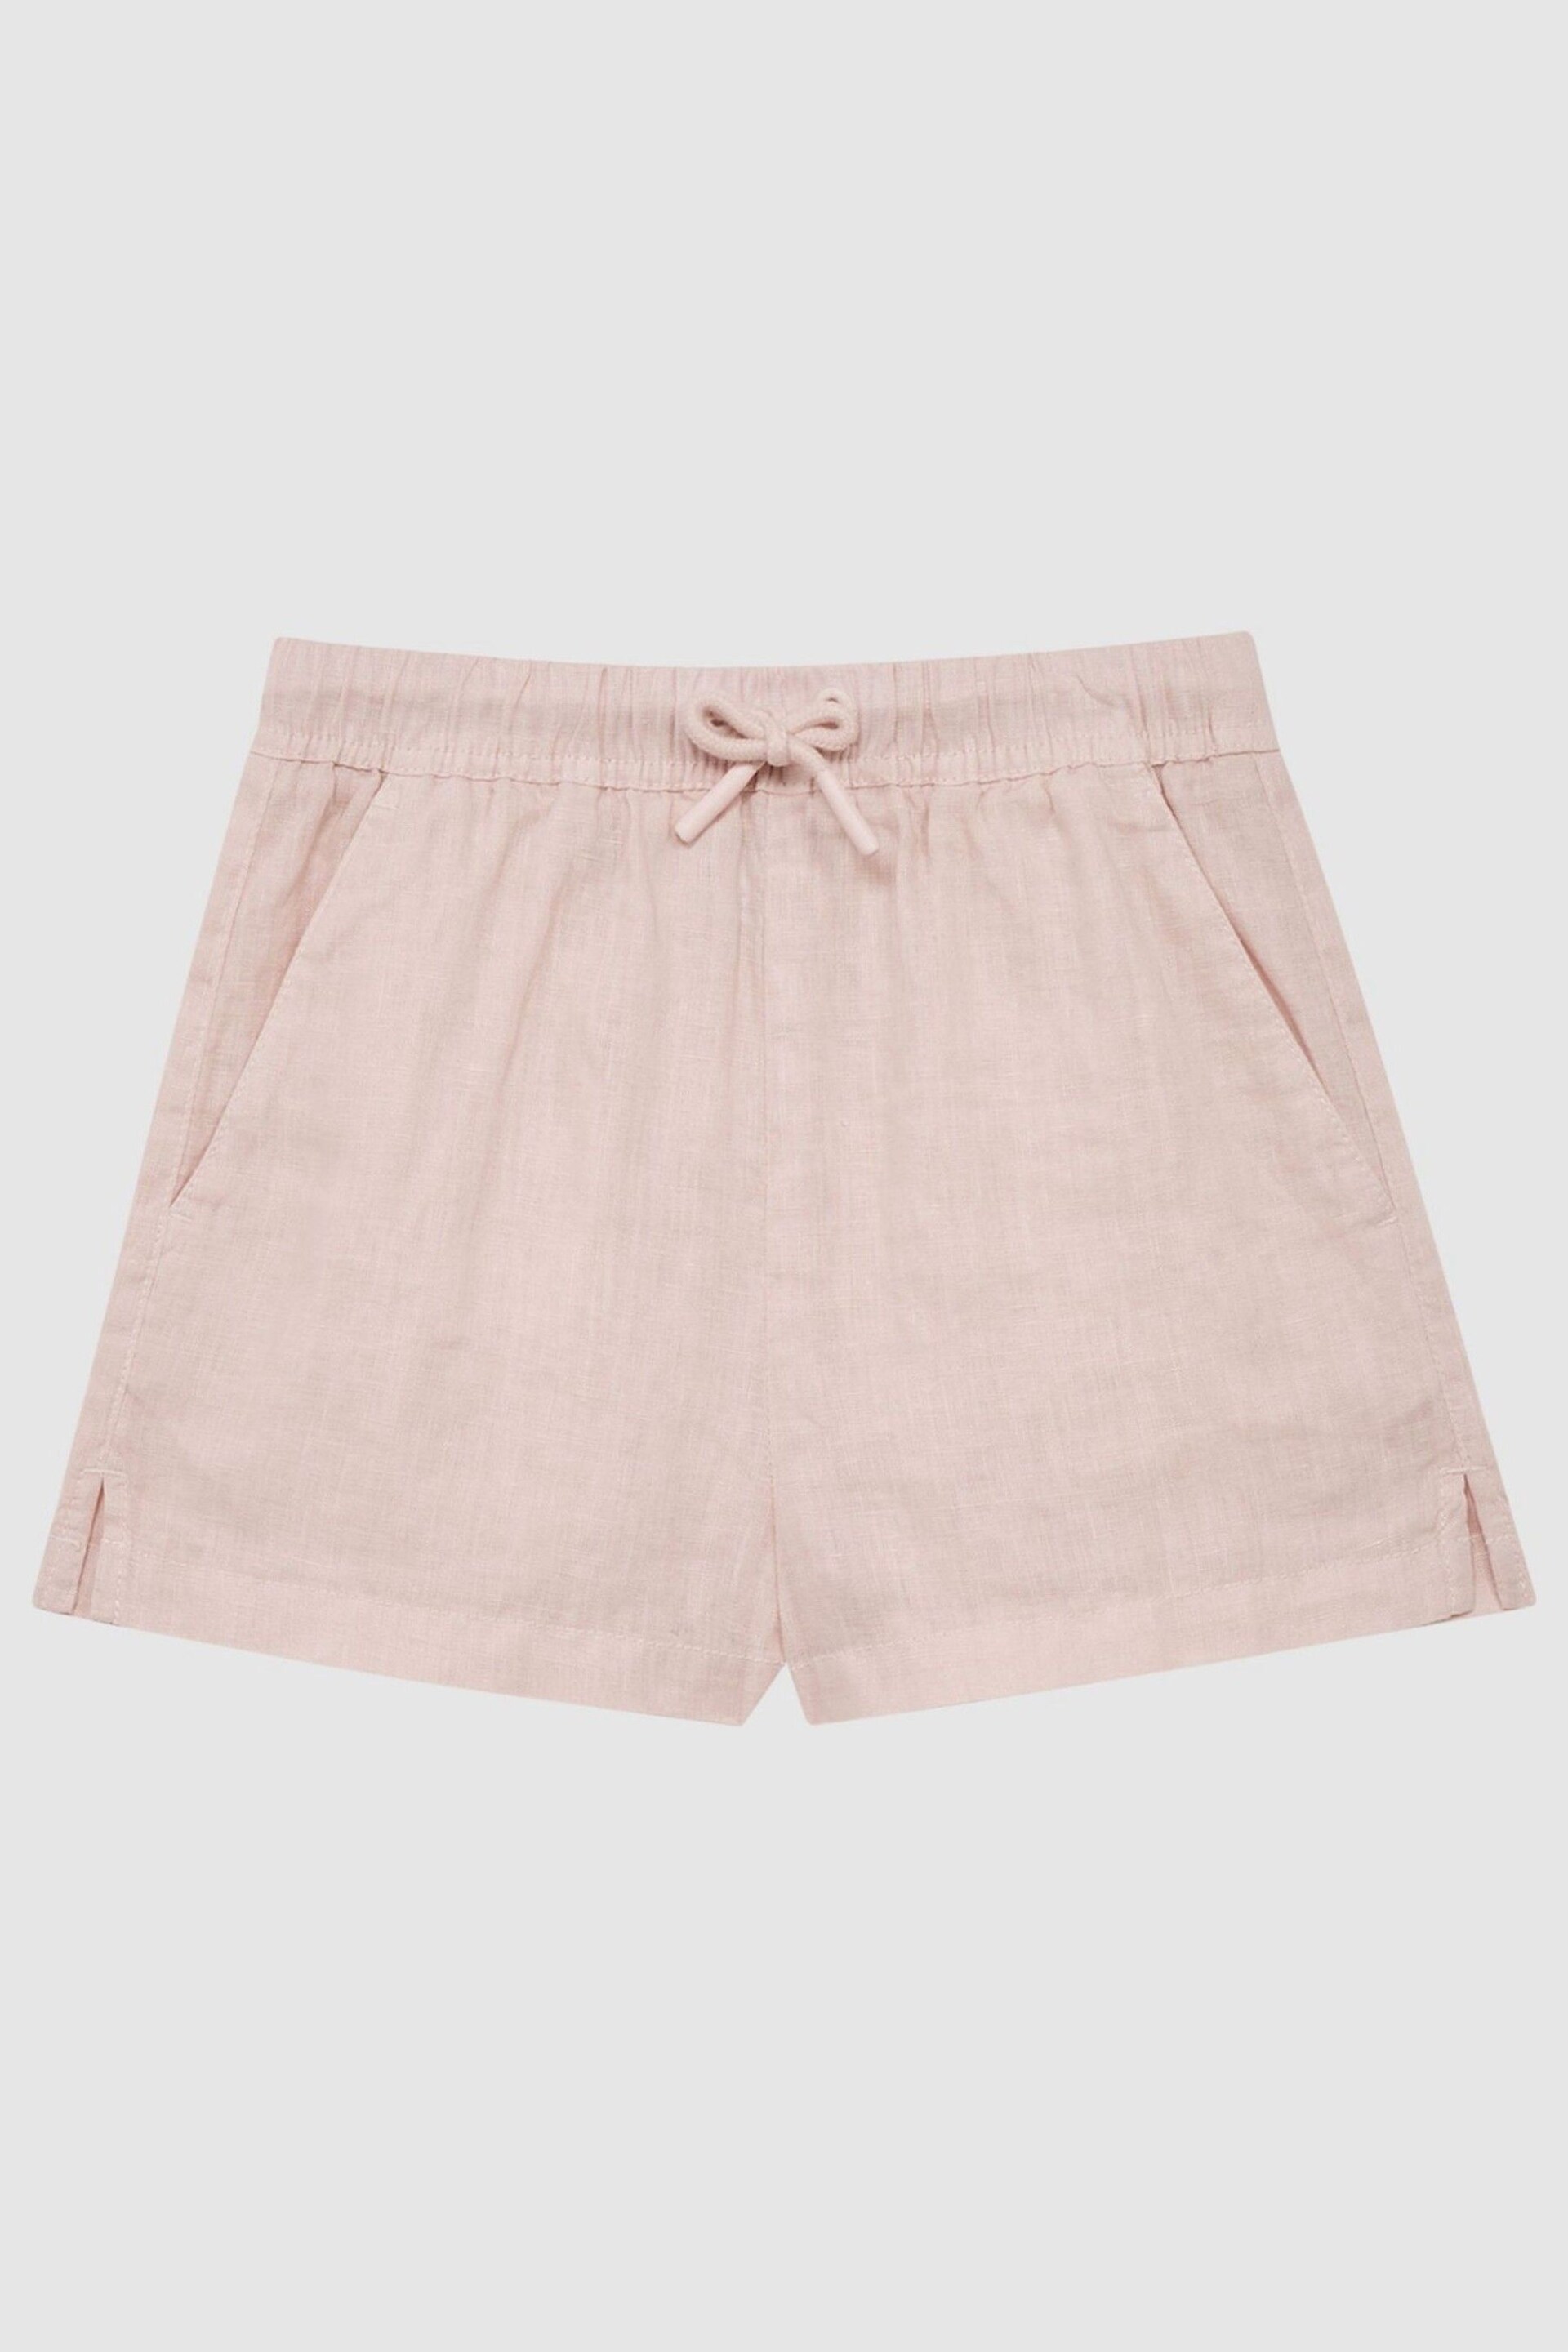 Reiss Soft Pink Cleo Senior Linen Drawstring Shorts - Image 2 of 6